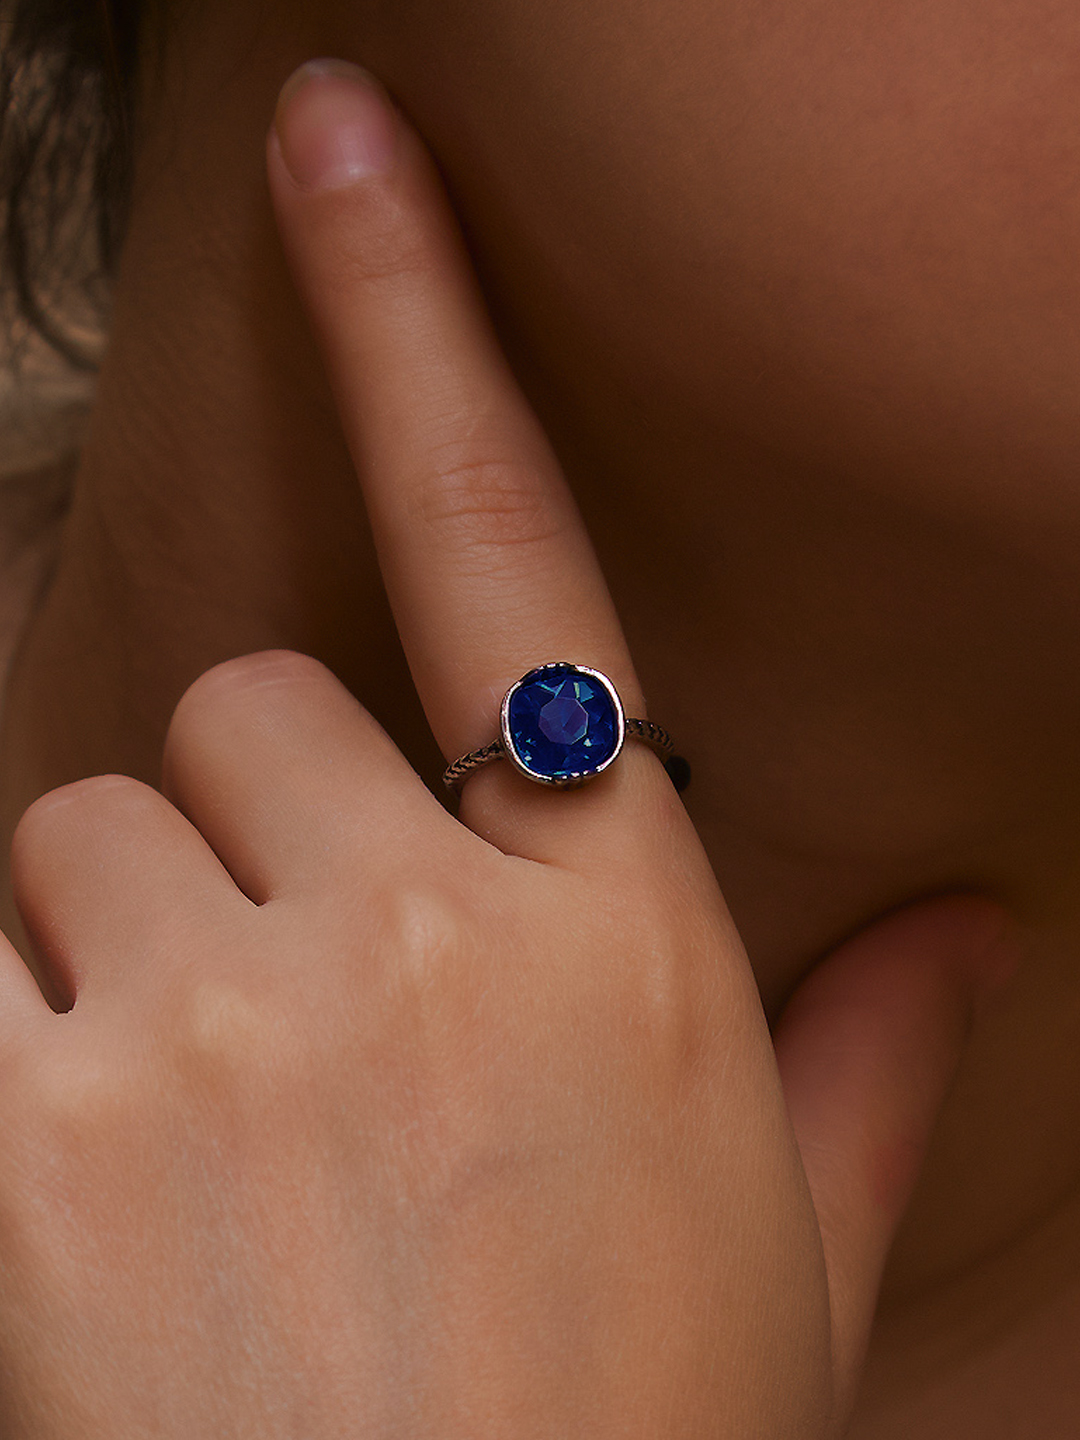 JewelsForum Zafiro Azul Ring Round Cut Blue Sapphire Crystal With 0.72  Carat Natural Diamond Engagement Rings (Colour HI Clarity I1-I2) |  Amazon.com